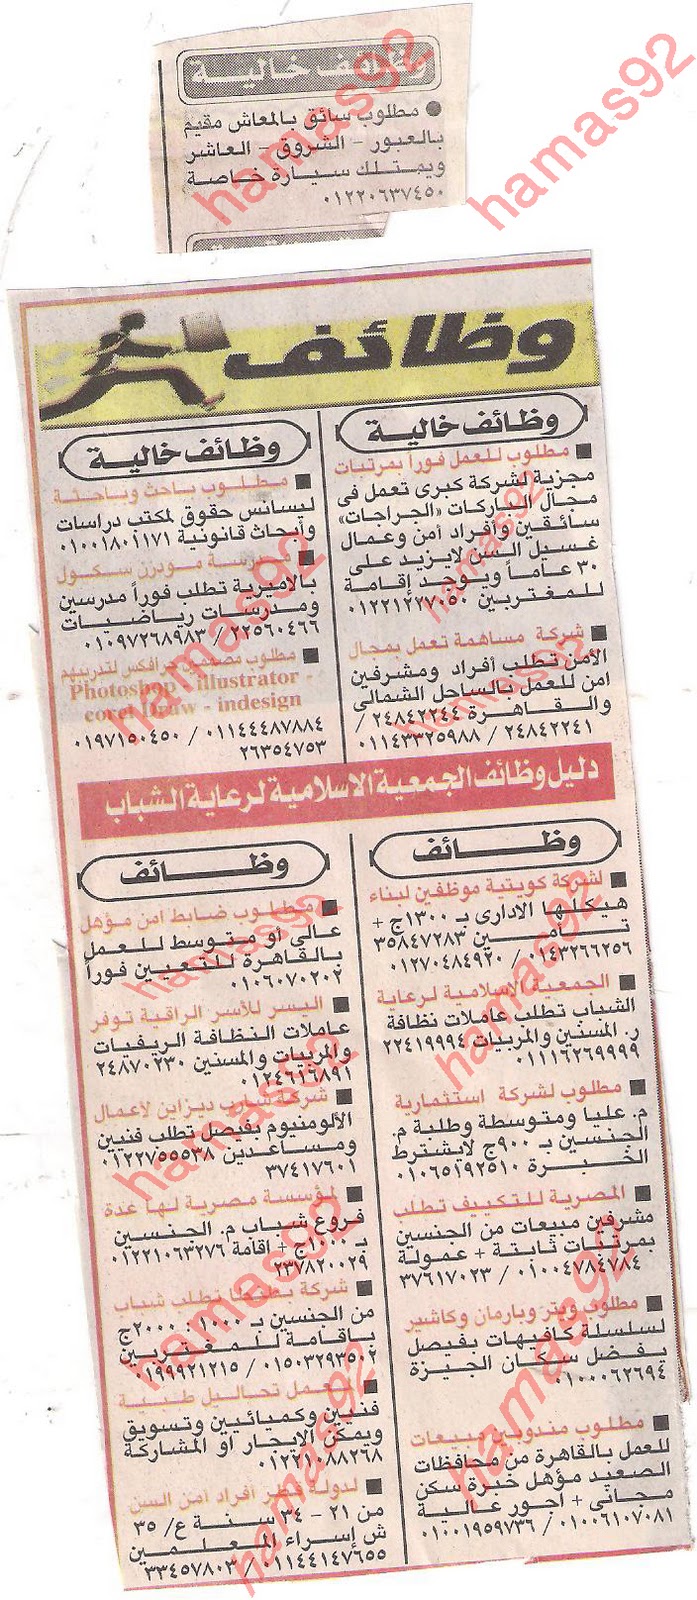 افراد امن , محامين  مدرسين رياضيات , فنيين وظائف فى مصر السبت 29 اكتوبر 2011 Picture+003